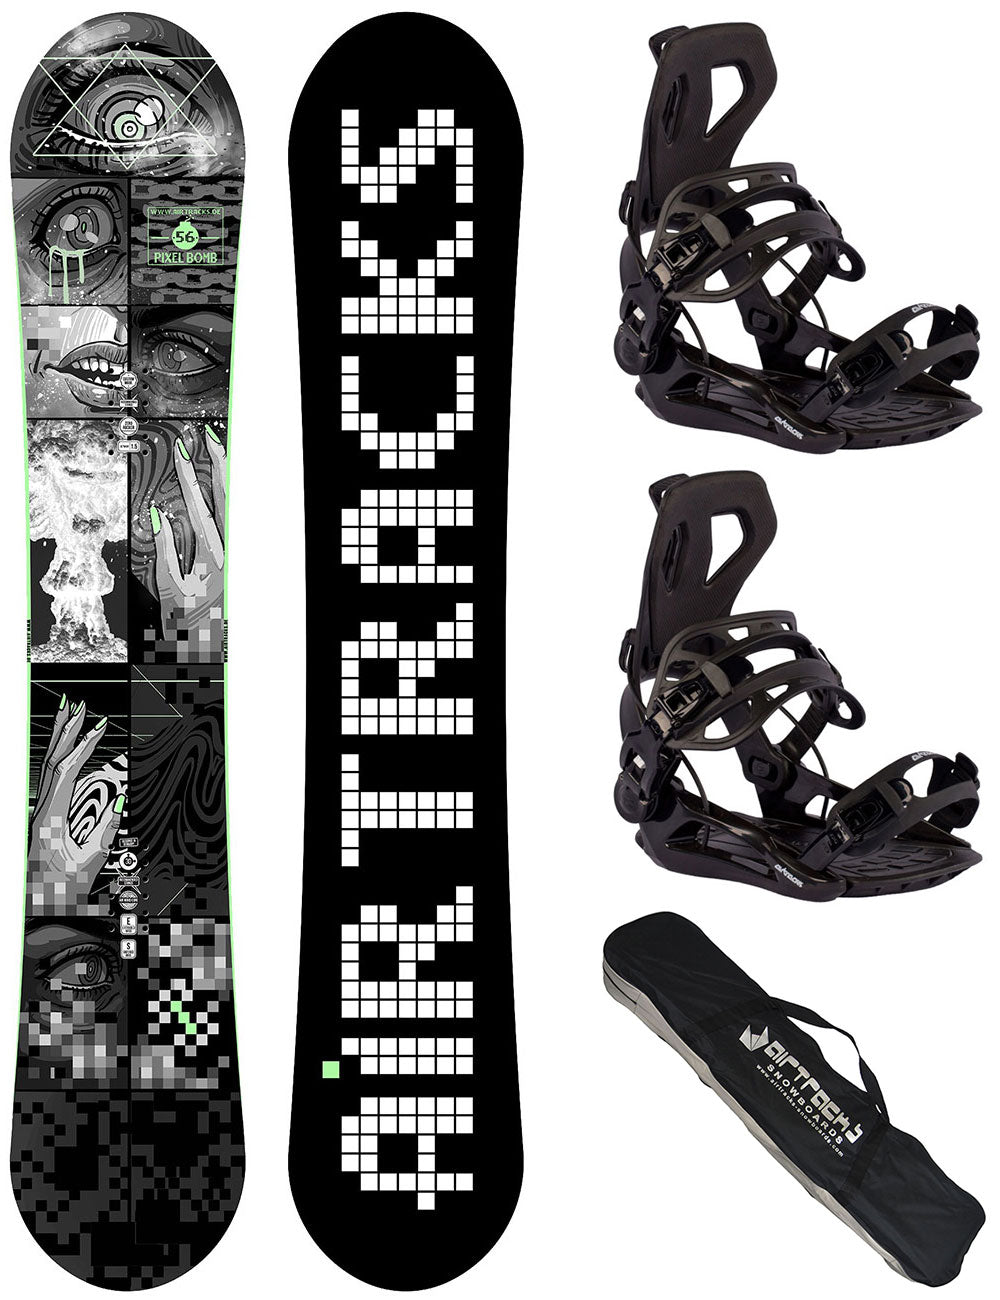 Herren Snowboardset Pixel Bomb Carbon Zero Rocker + Snowboard Bindung Master Pro + SB Bag